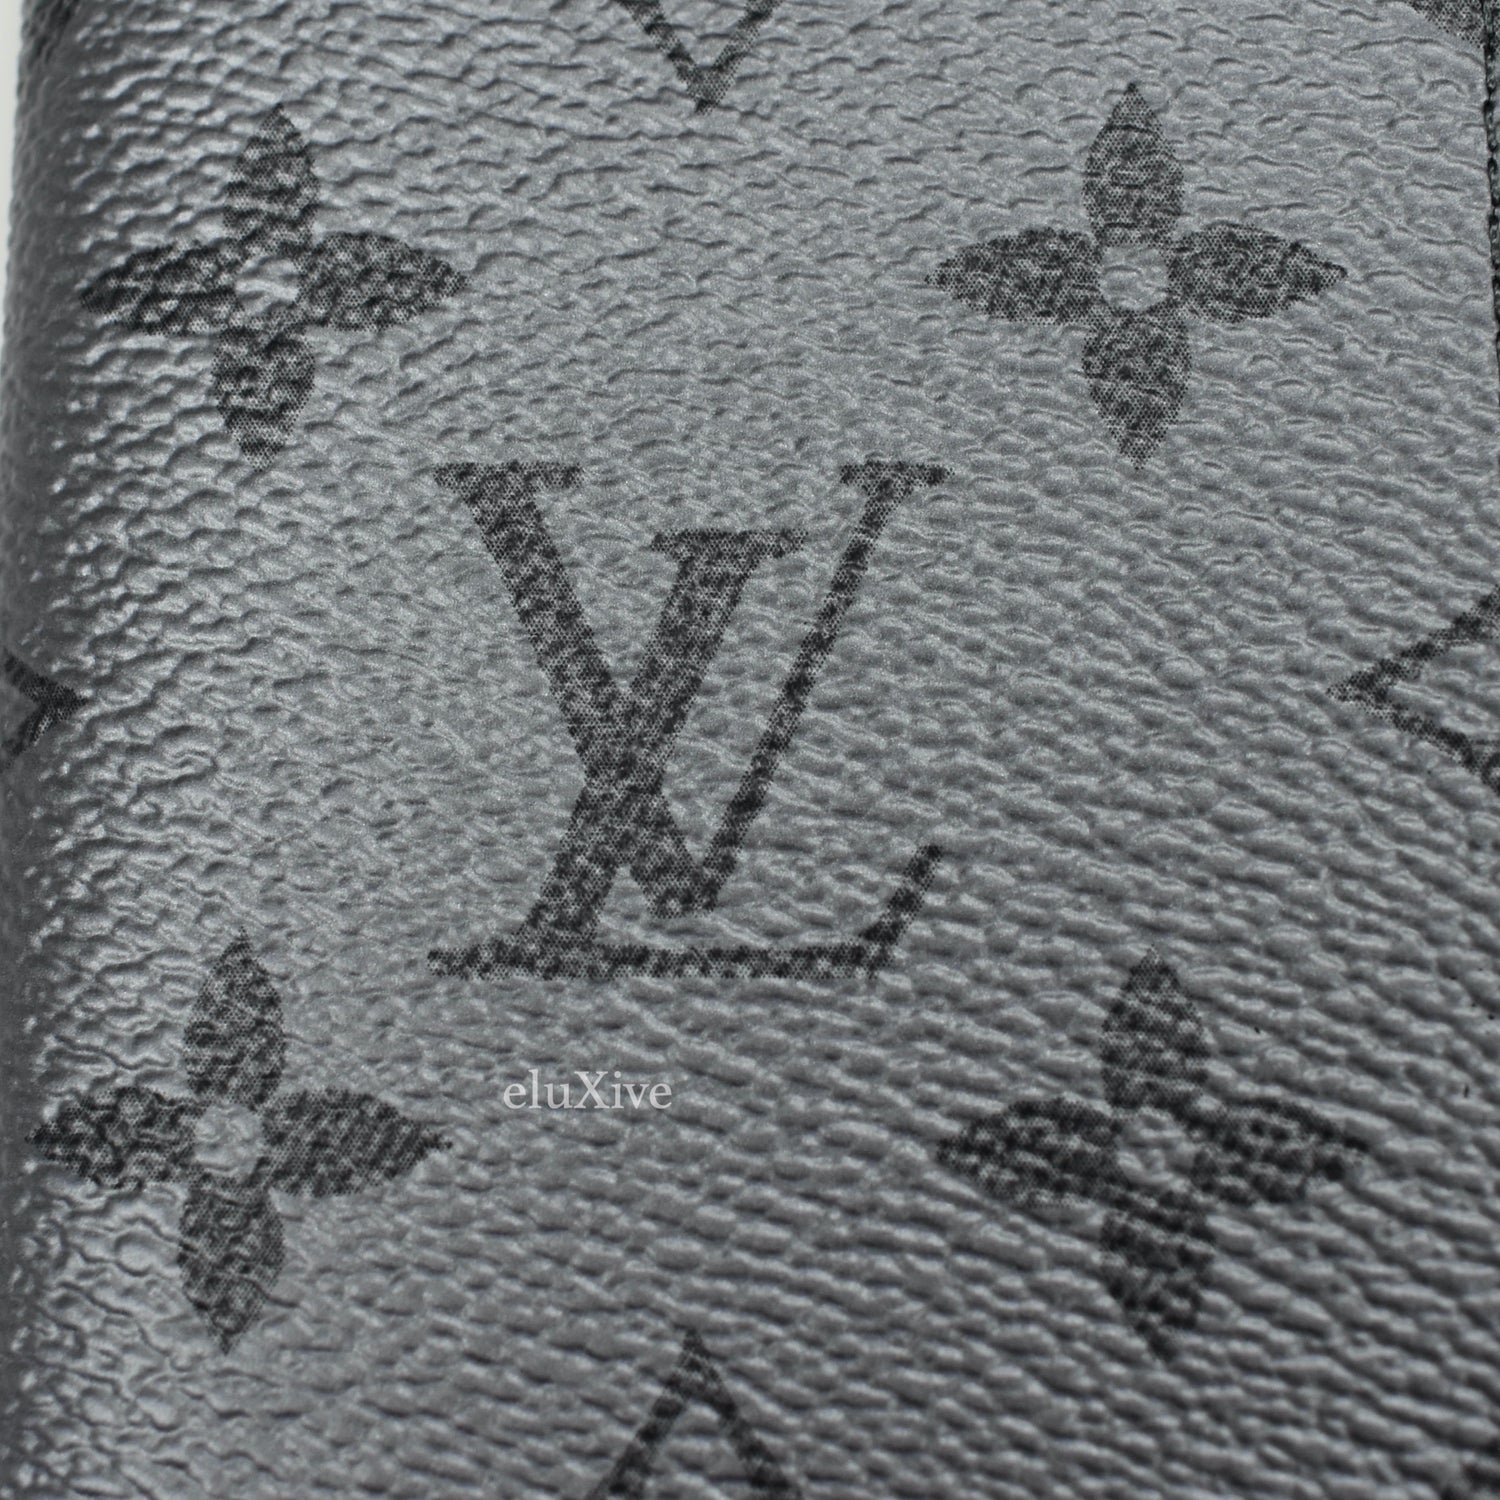 LOUIS VUITTON Pocket Organizer Monogram Canvas Wallet Black/Brown